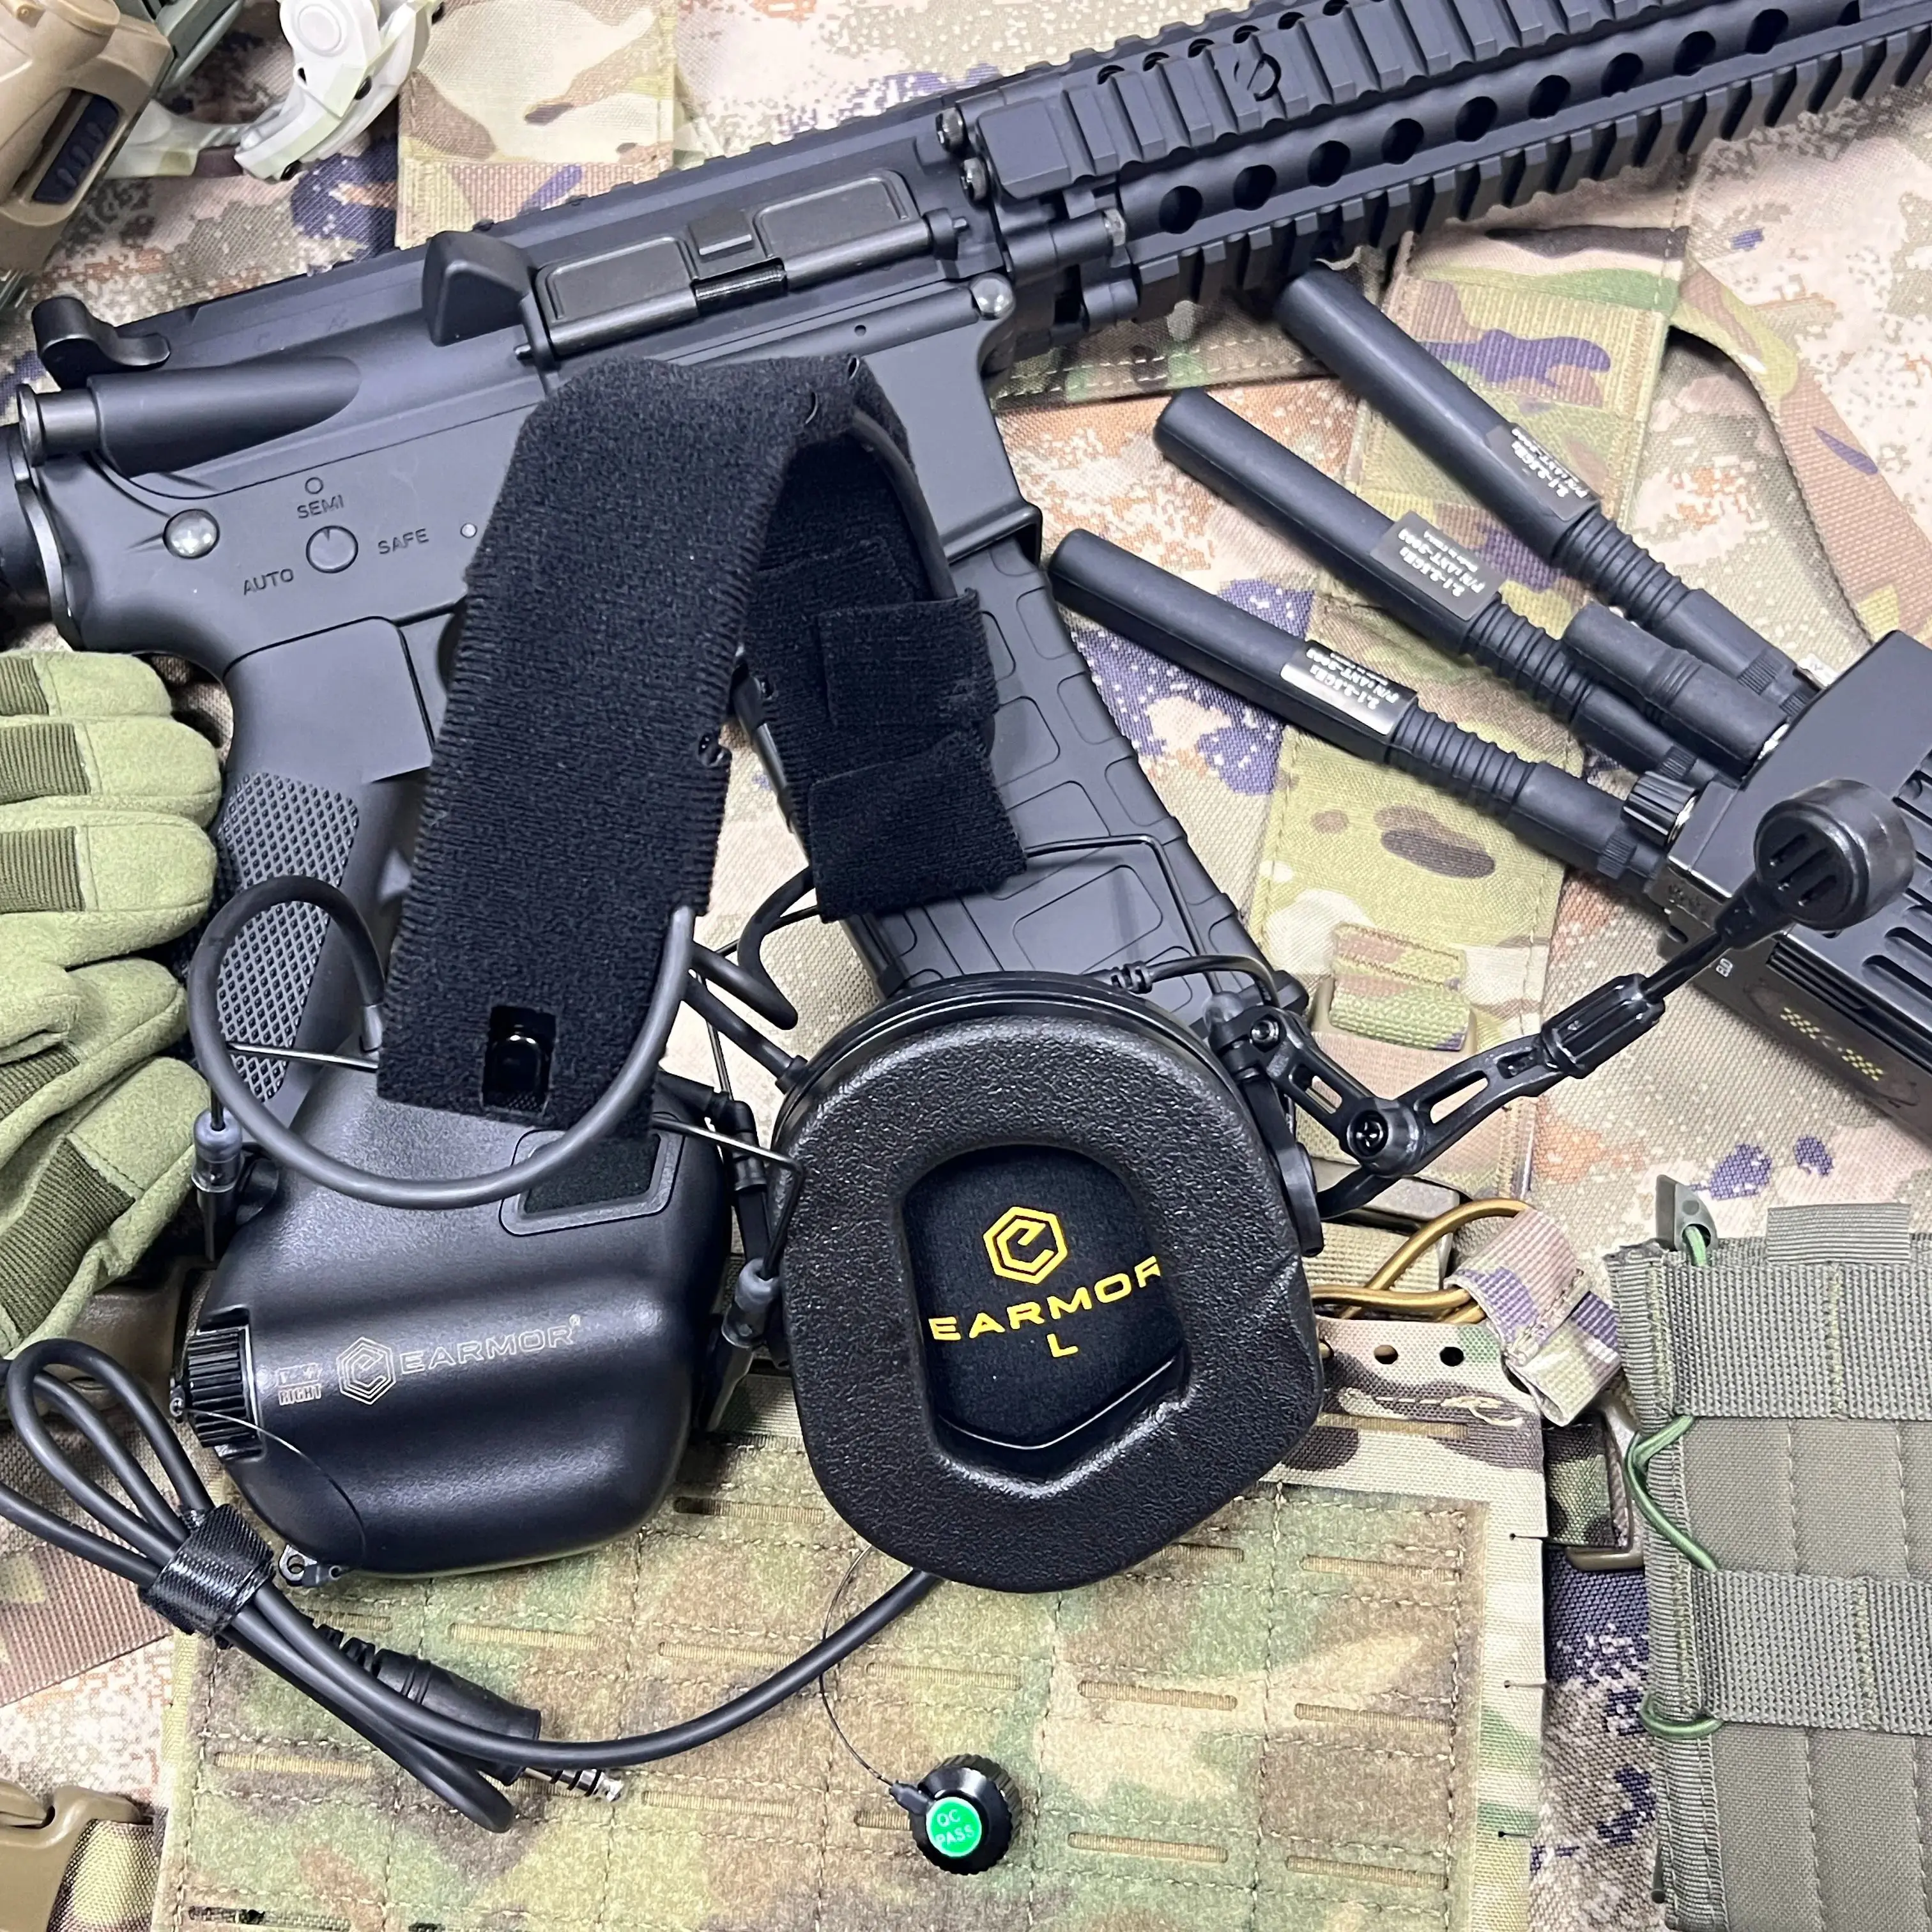 OPSMEN Shooting Tactical Headset M32-Mark3 MilPro Military Standard MIL-STD-416 protezione dell'udito per comunicazioni elettroniche